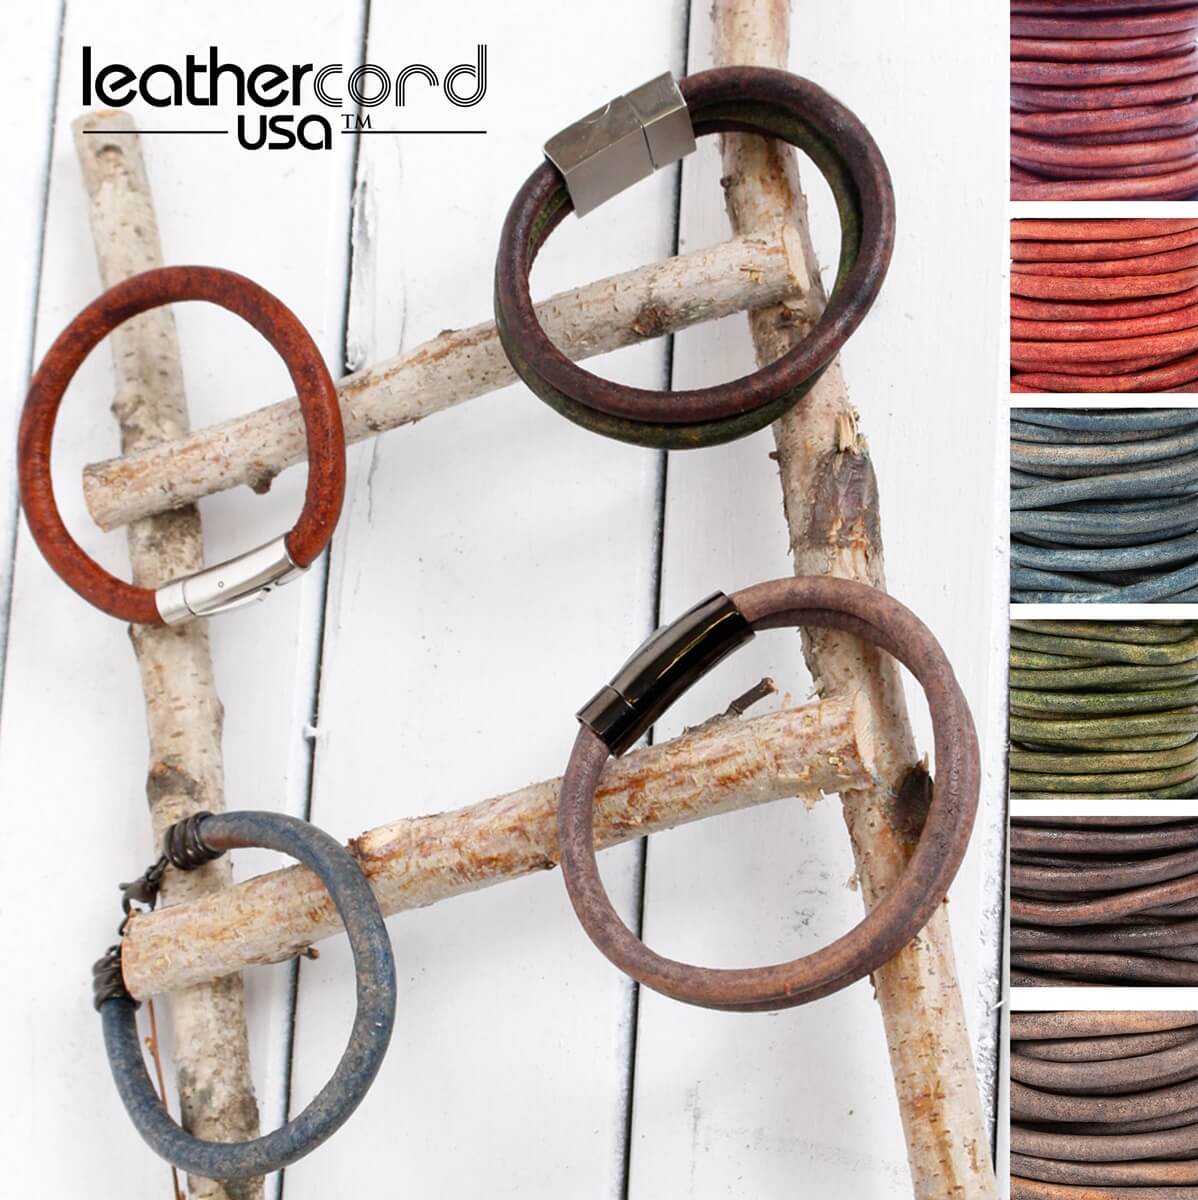 Leather Cord USA Image